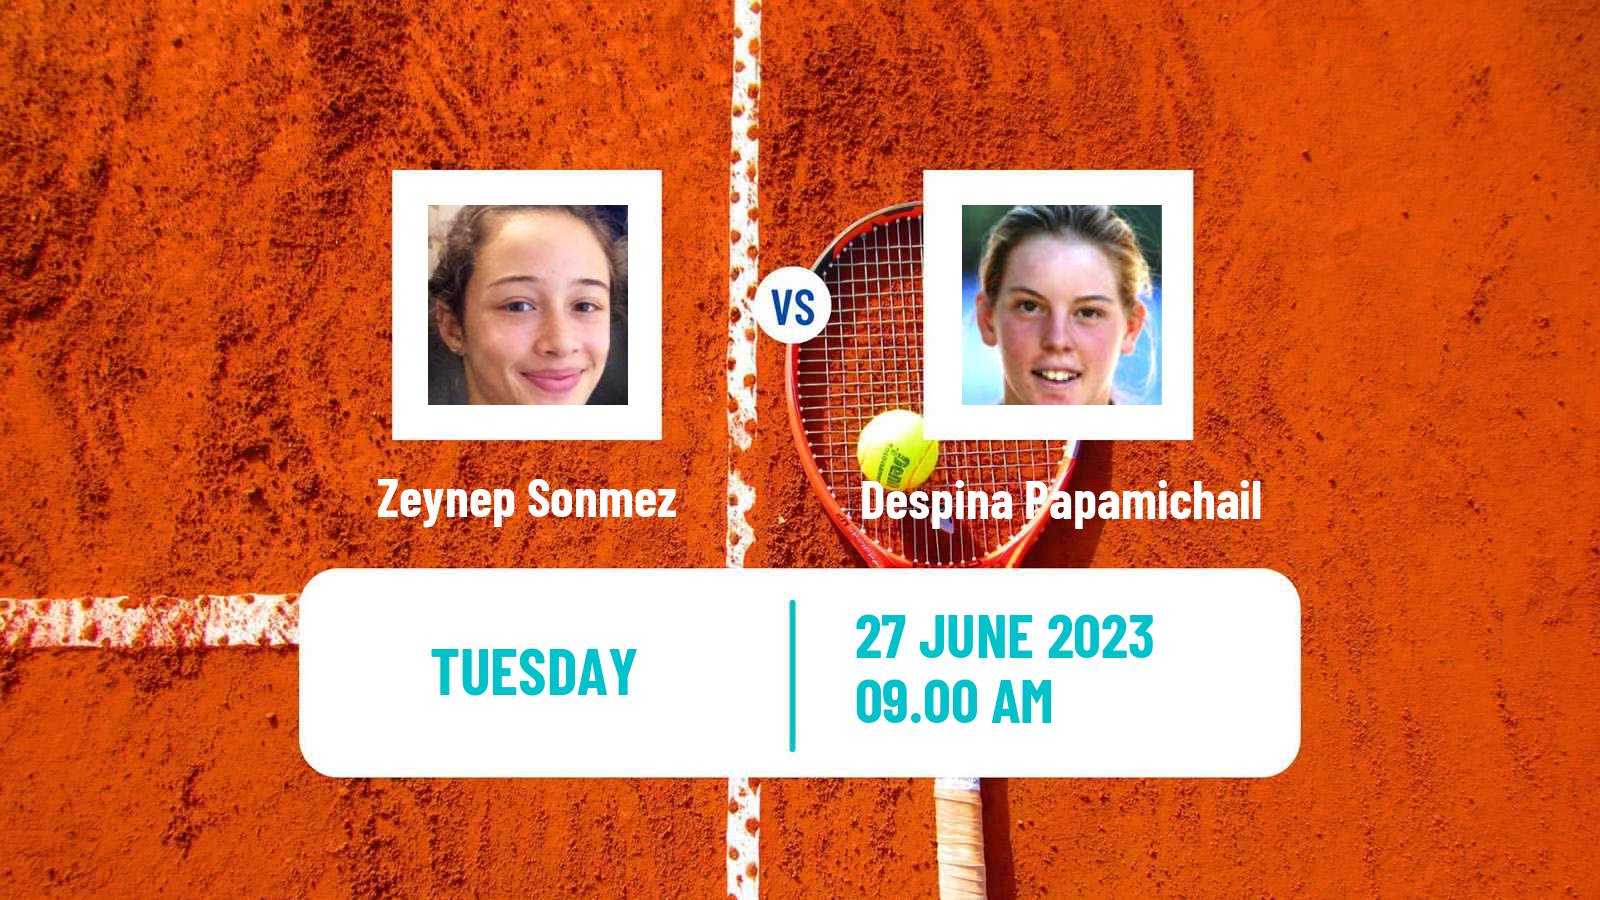 Tennis WTA Wimbledon Zeynep Sonmez - Despina Papamichail